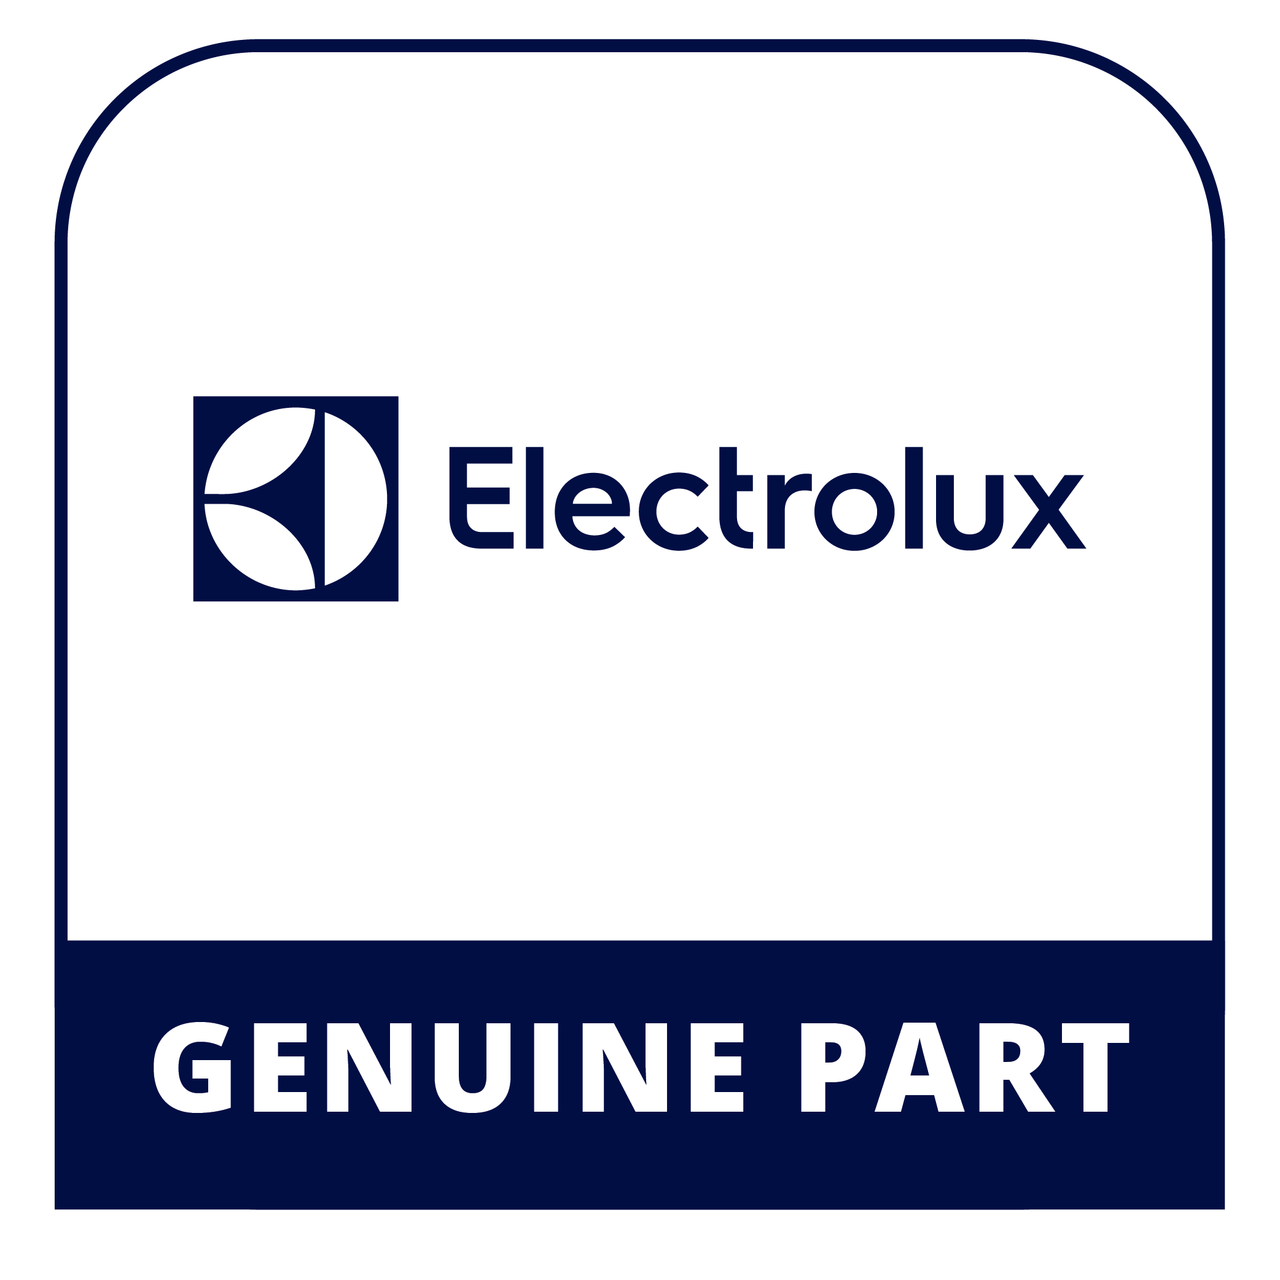 Frigidaire - Electrolux 5304520036 Film - Genuine Electrolux Part